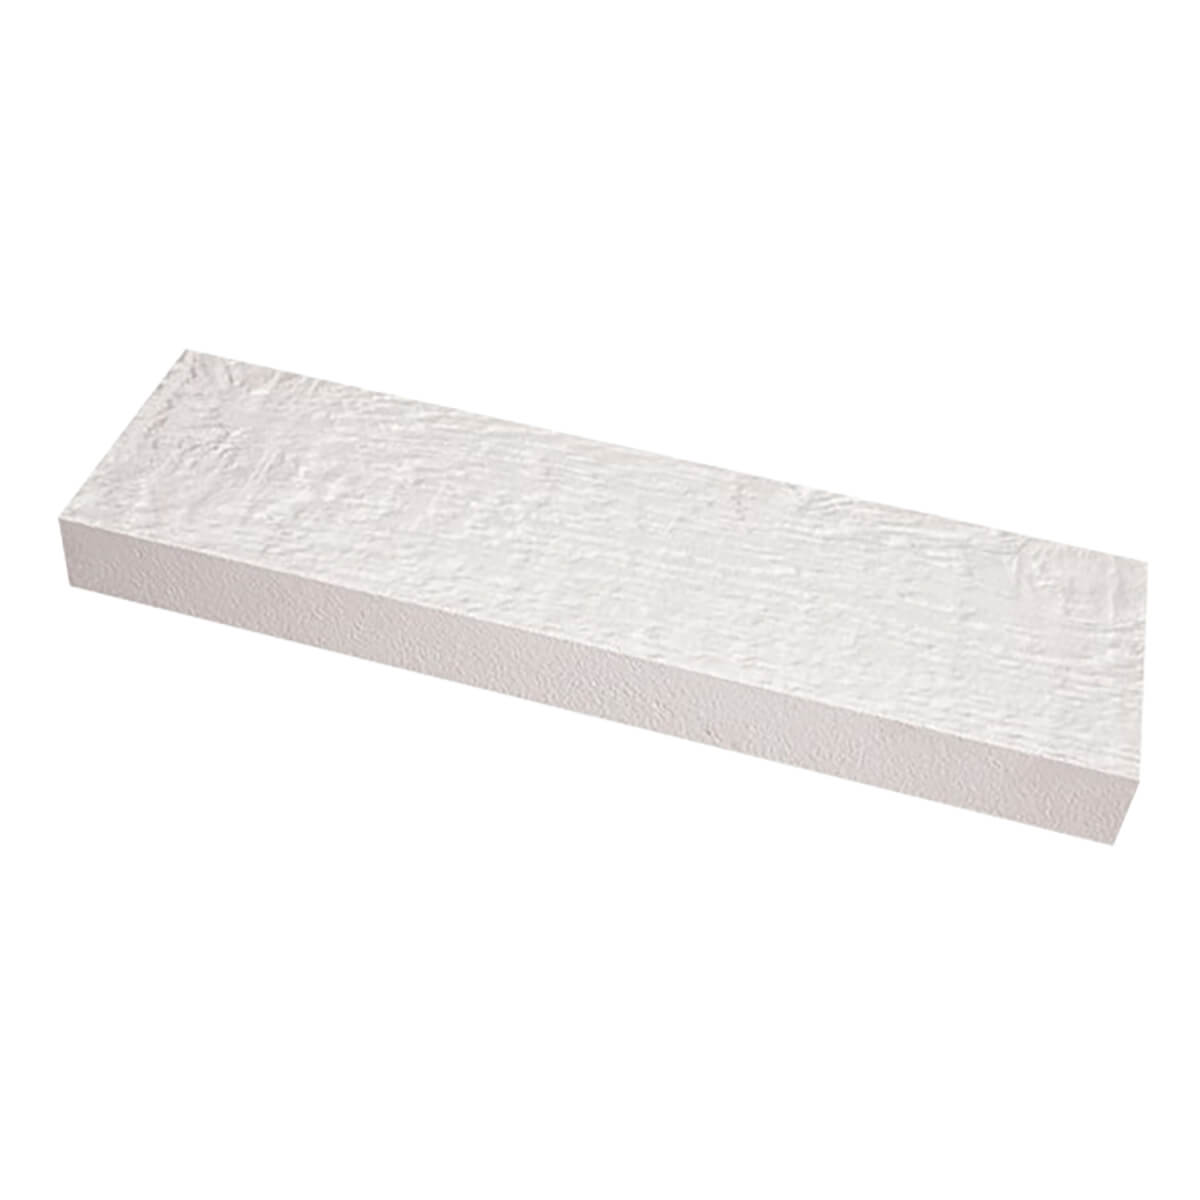 Trim board, White - 2  Pack - 5/4-in x 4-in x 12-ft